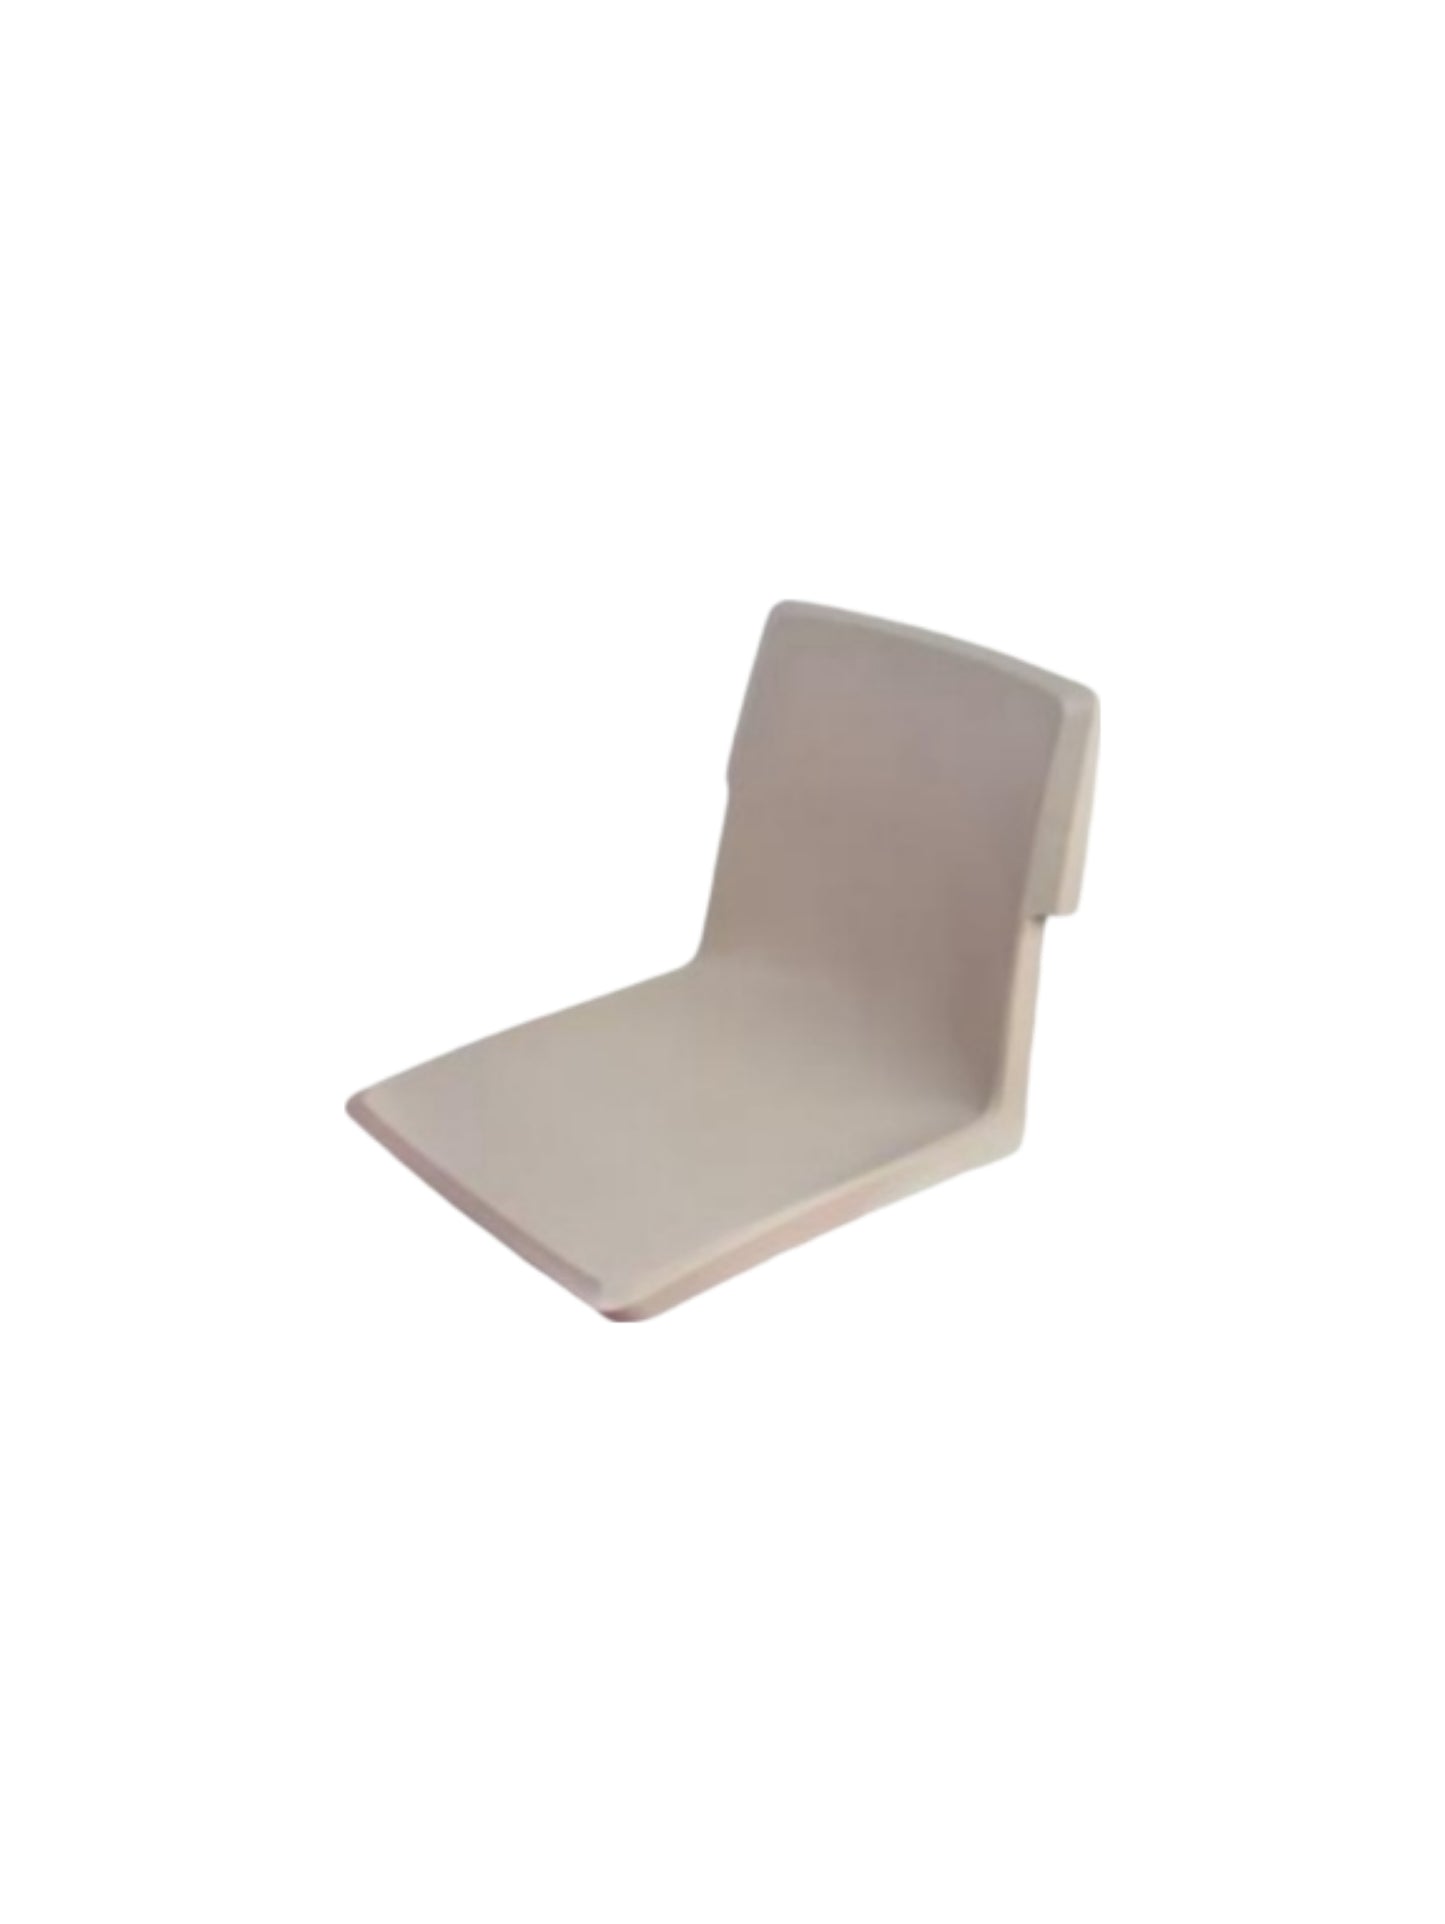 MODEL MT-701-C Size 35*30*33 cm High quality Custom Injection mold plastic school seat shell